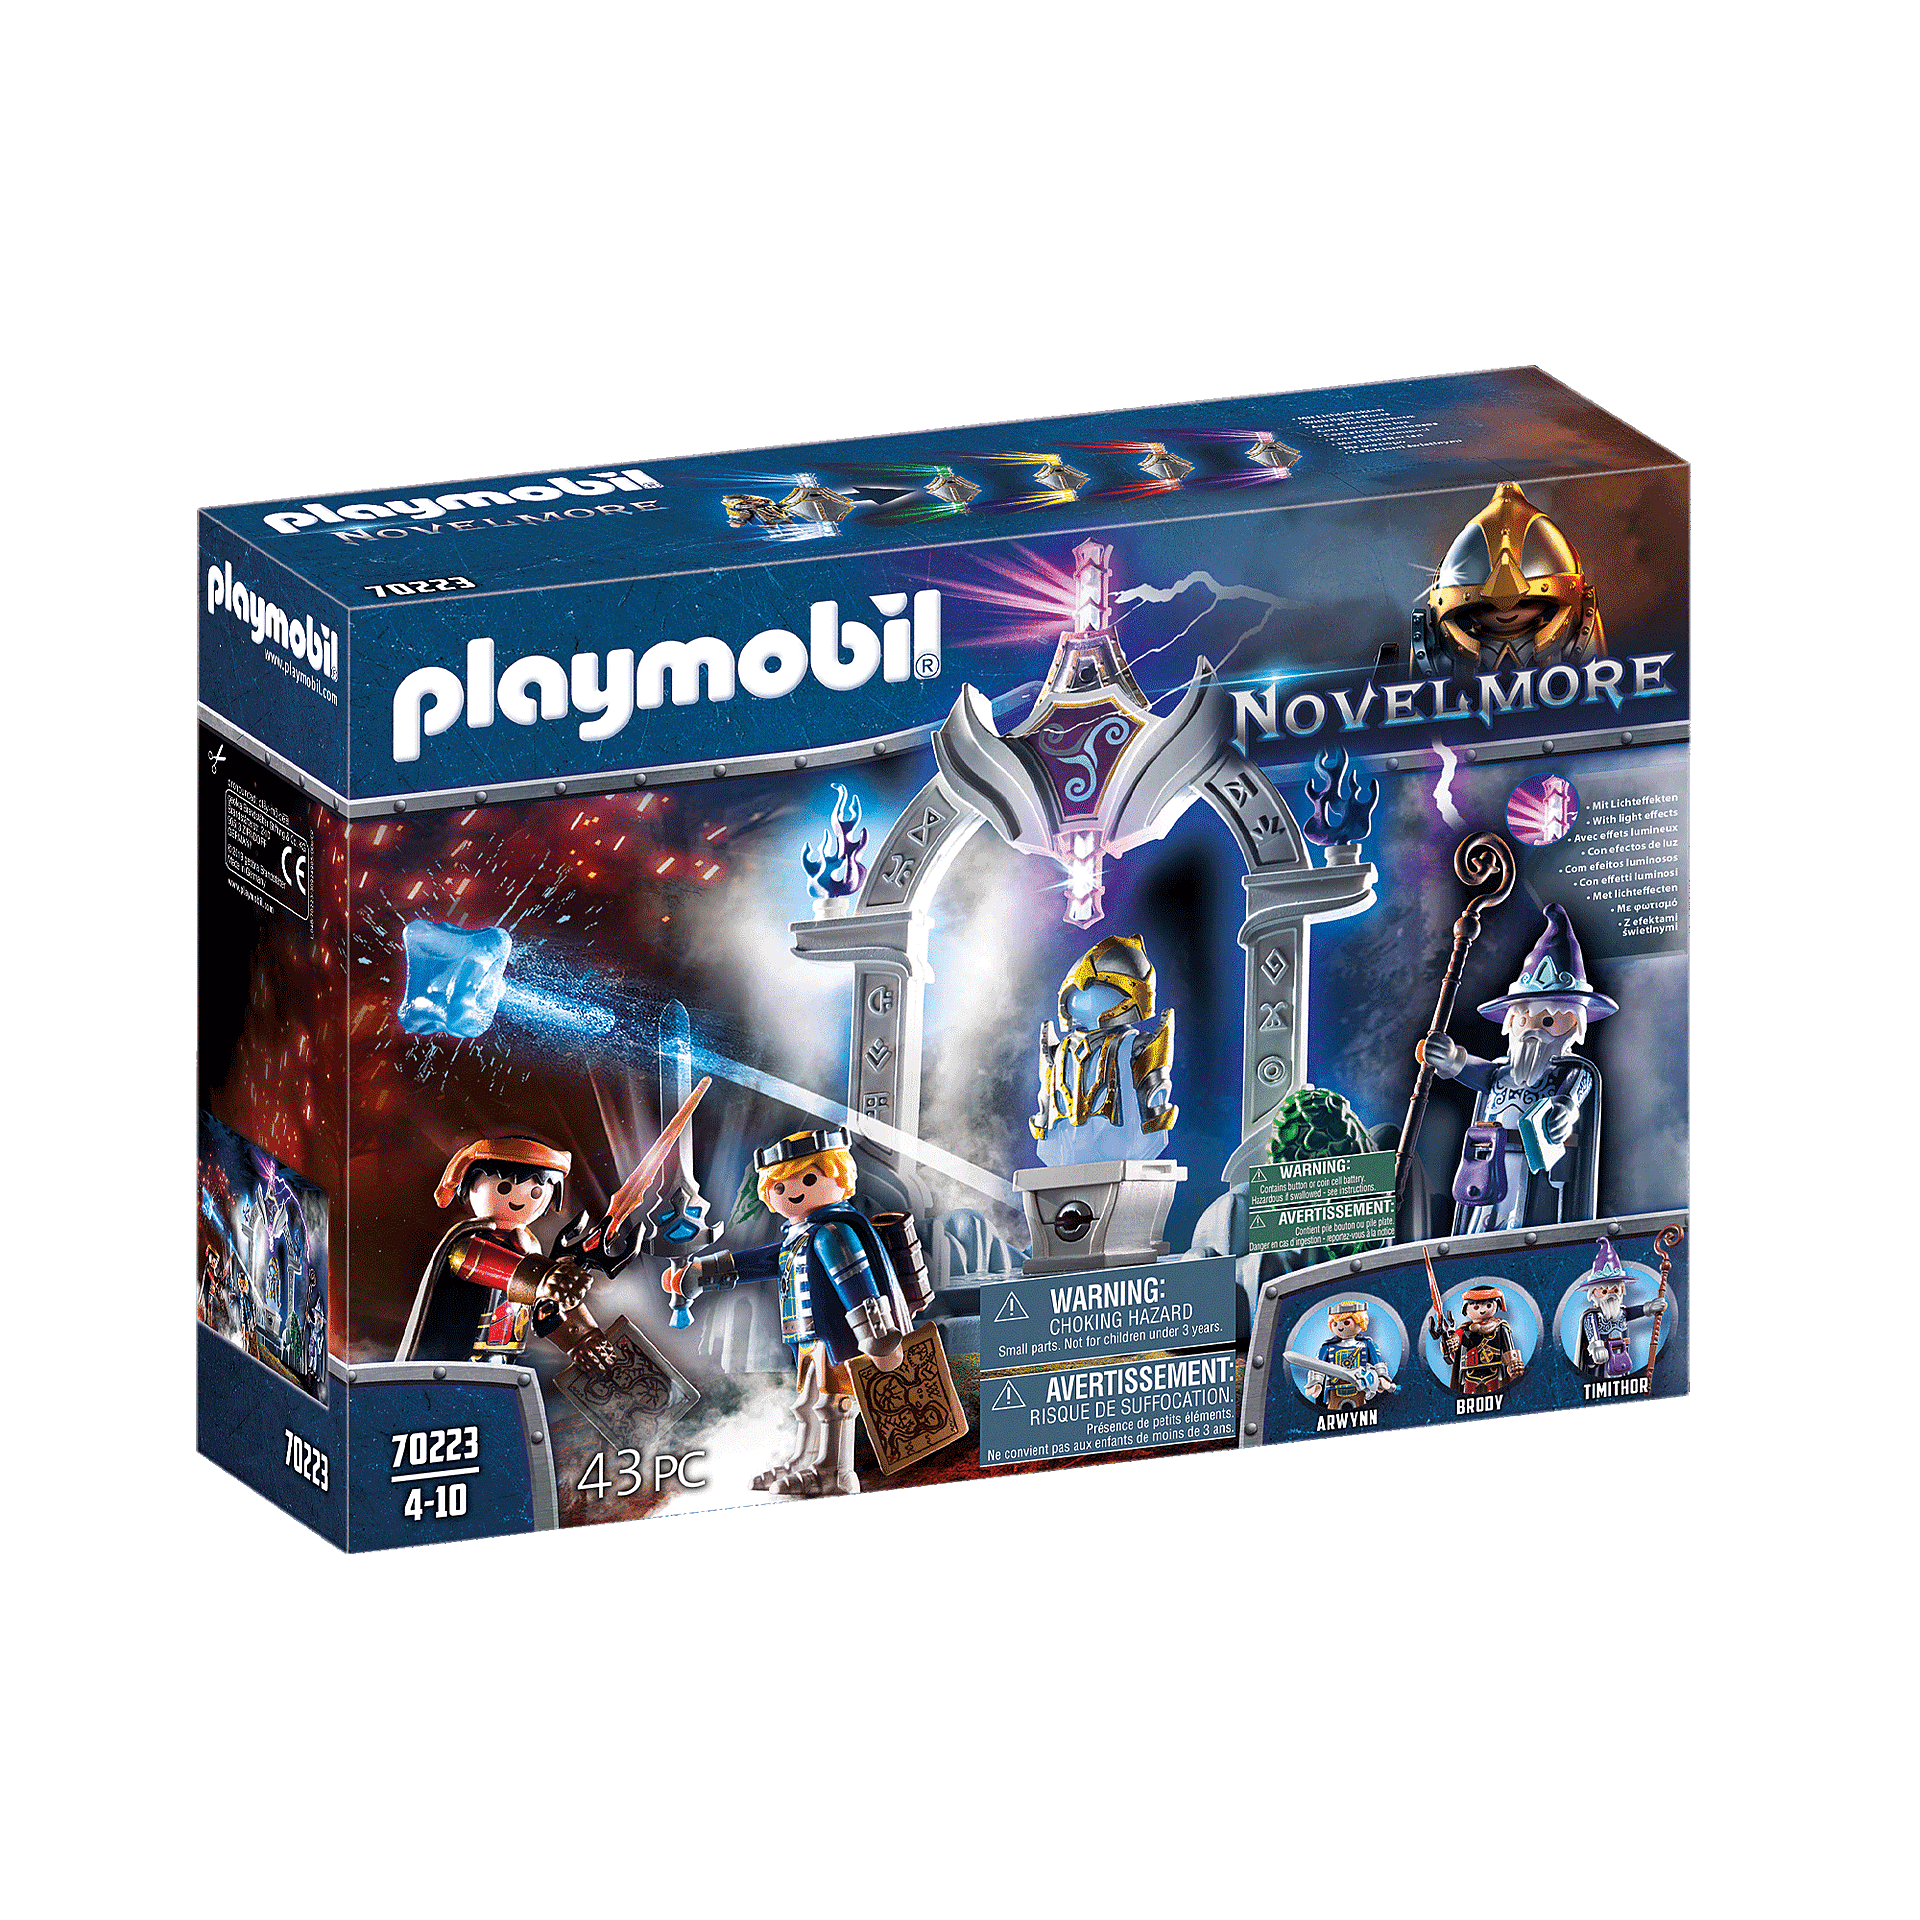 Playmobil-Novelmore - Temple of Time-70223-Legacy Toys